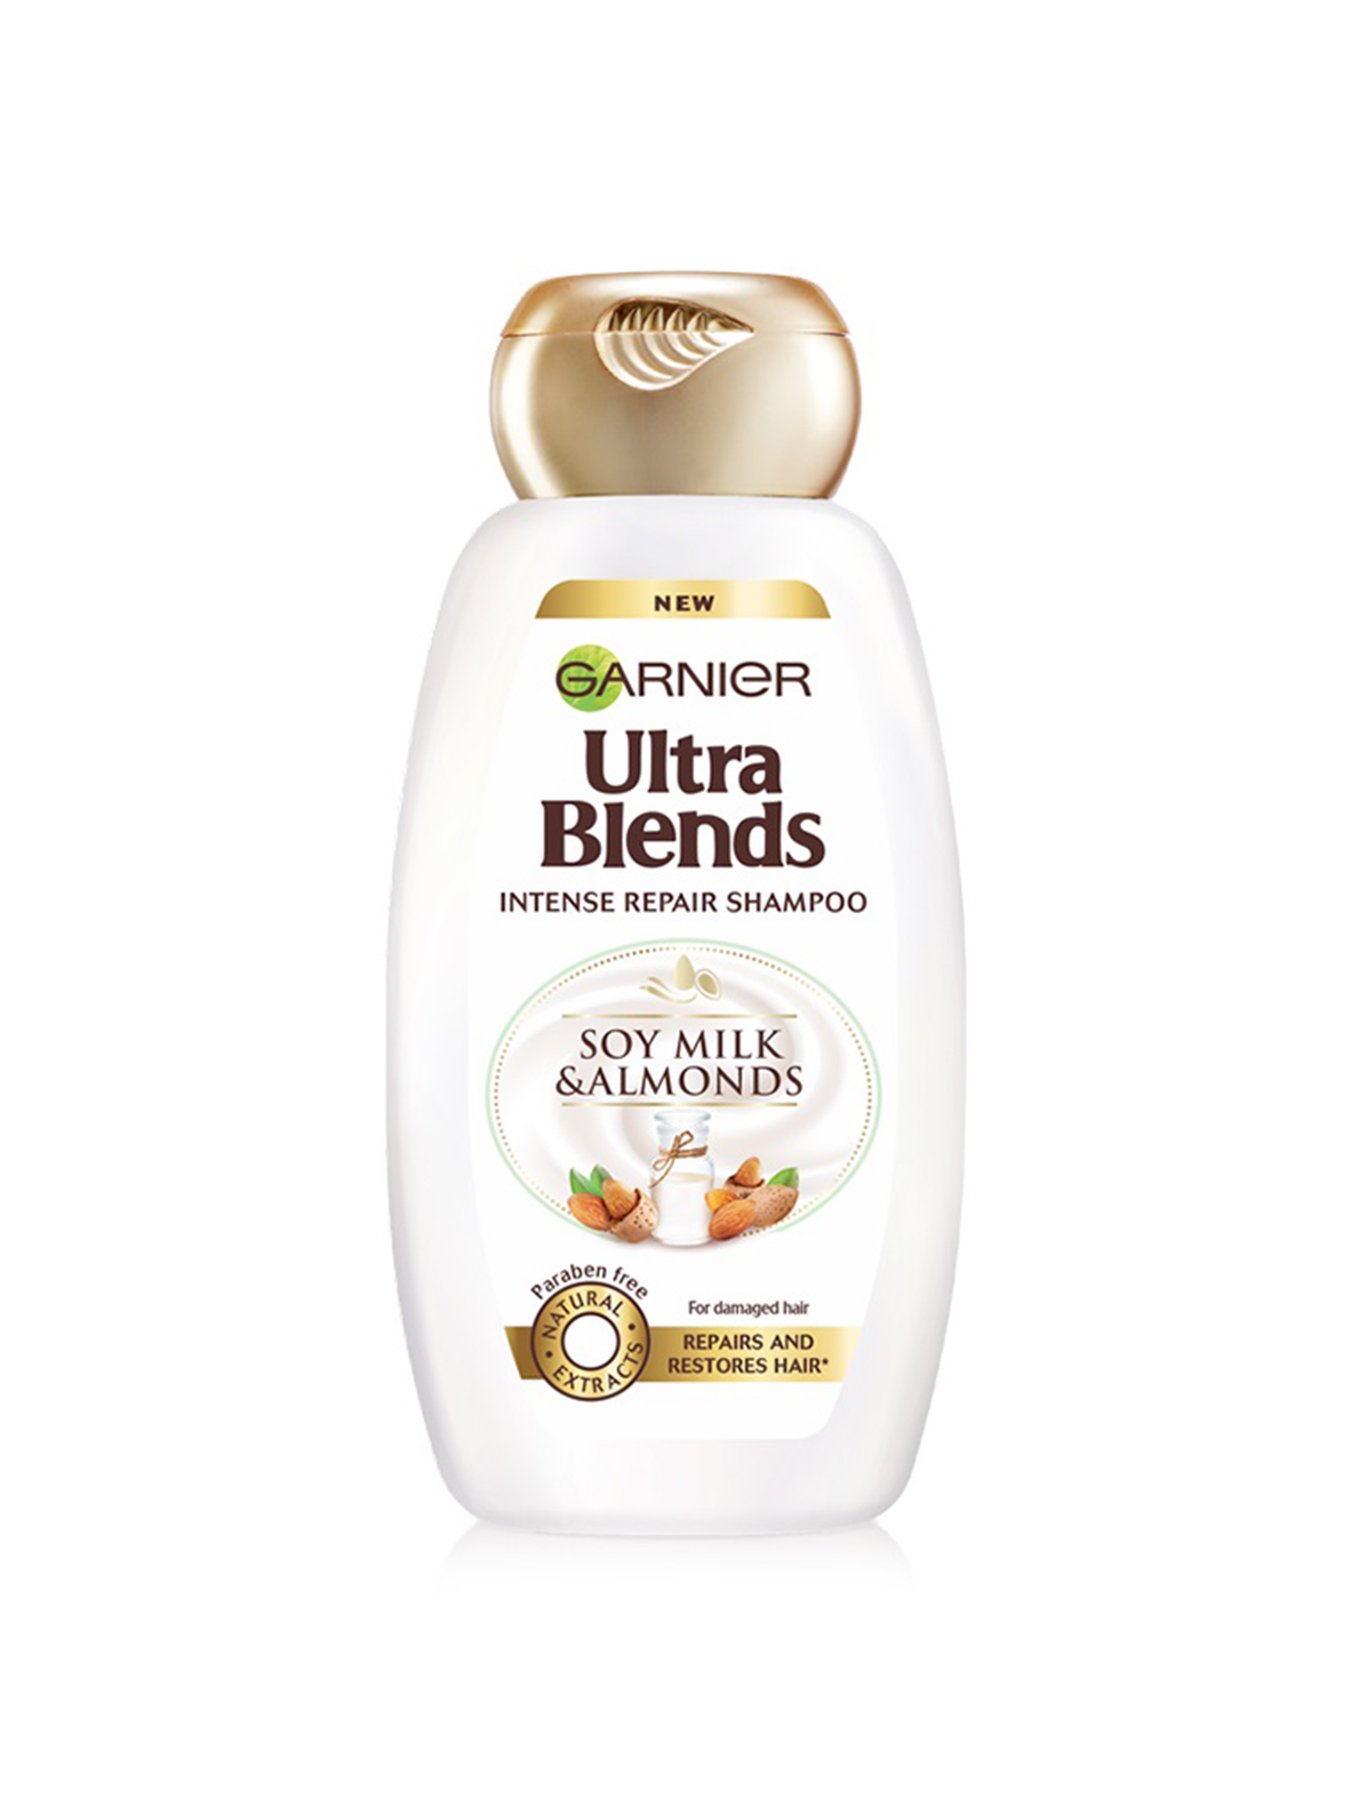 Garnier Ultra Blends Soy Milk and Almonds Shampoo 340 ml